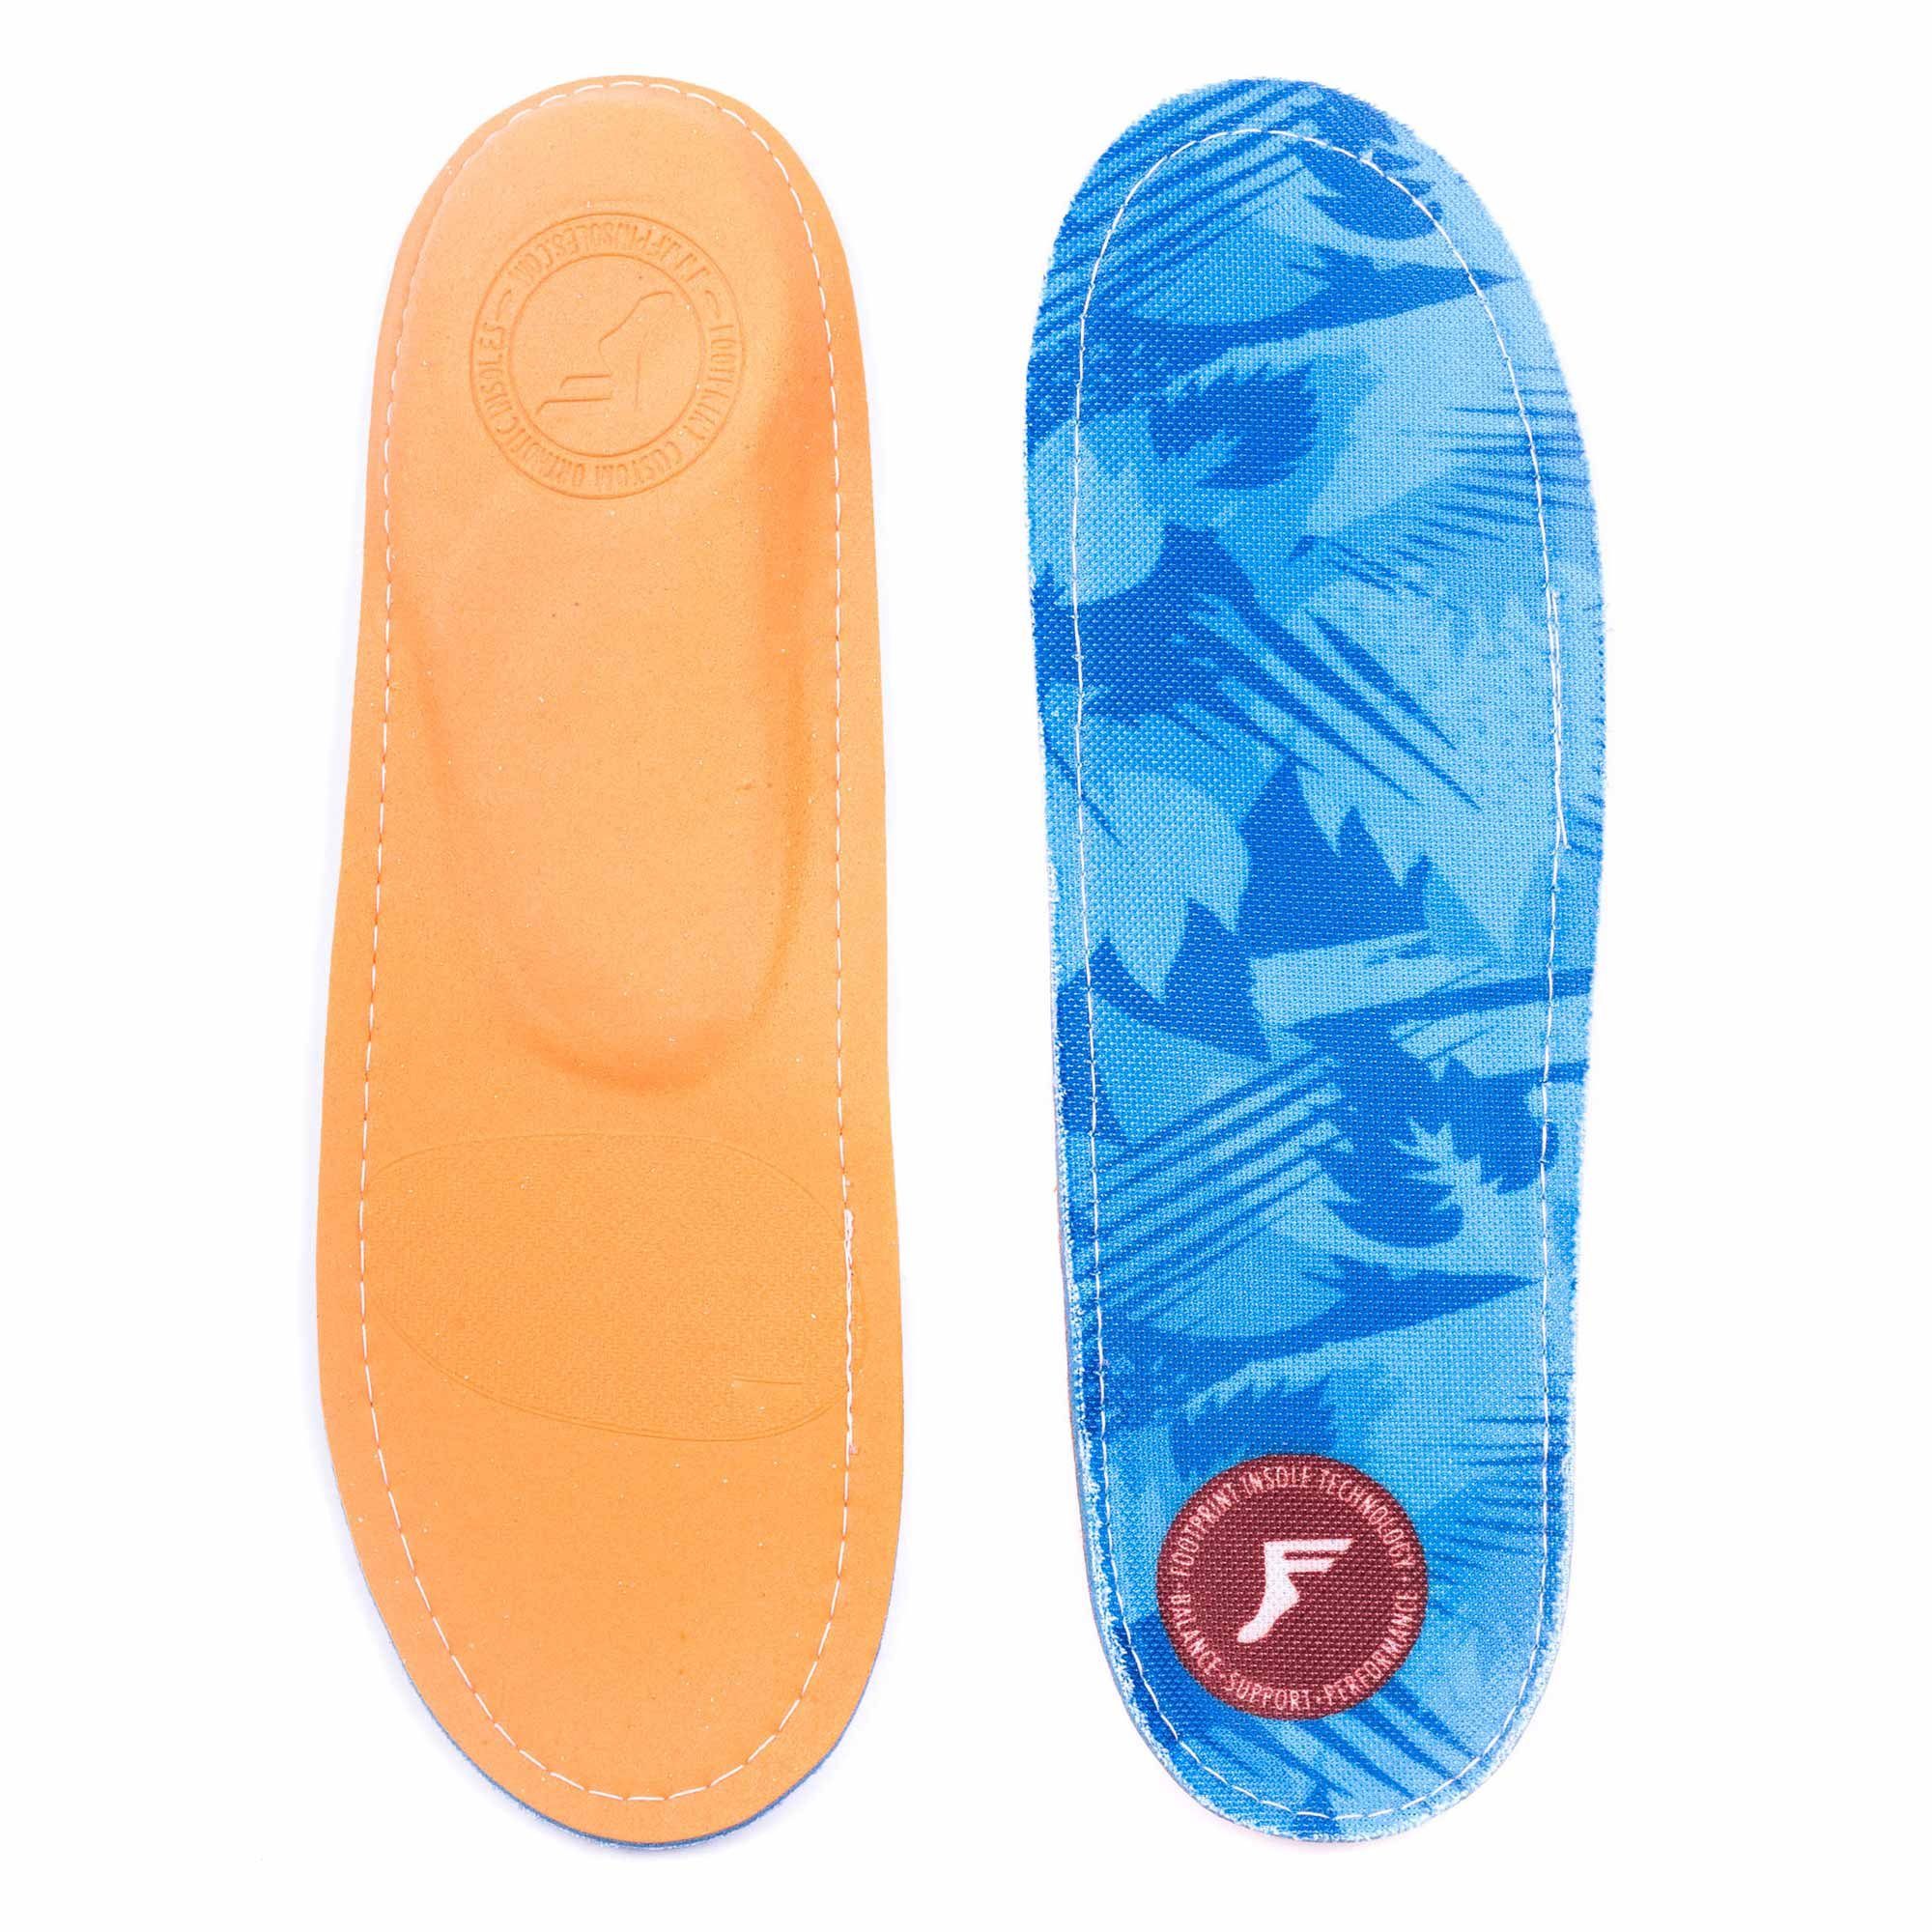 Kingfoam und (blue/camo) Orthotics (1 Paar) Footprint Insole Fuß- - Gelenkdämpfer Low